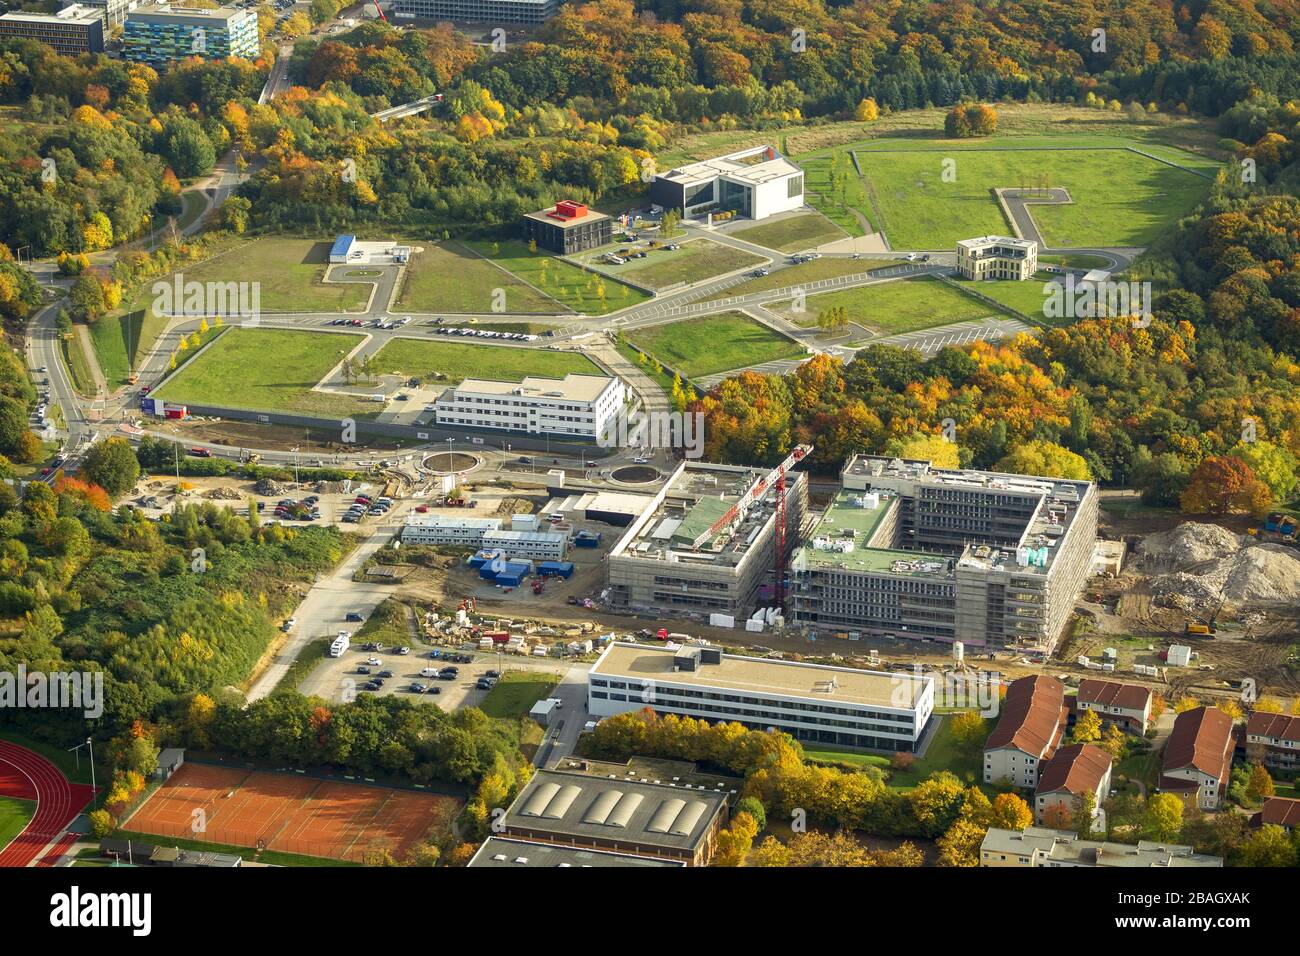 New biomedicine Park Health Campus in Bochum, Hochschule fuer Gesundheit in Bochum-Querenburg, 22.10.2013, aerial view, Germany, North Rhine-Westphalia, Ruhr Area, Bochum Stock Photo